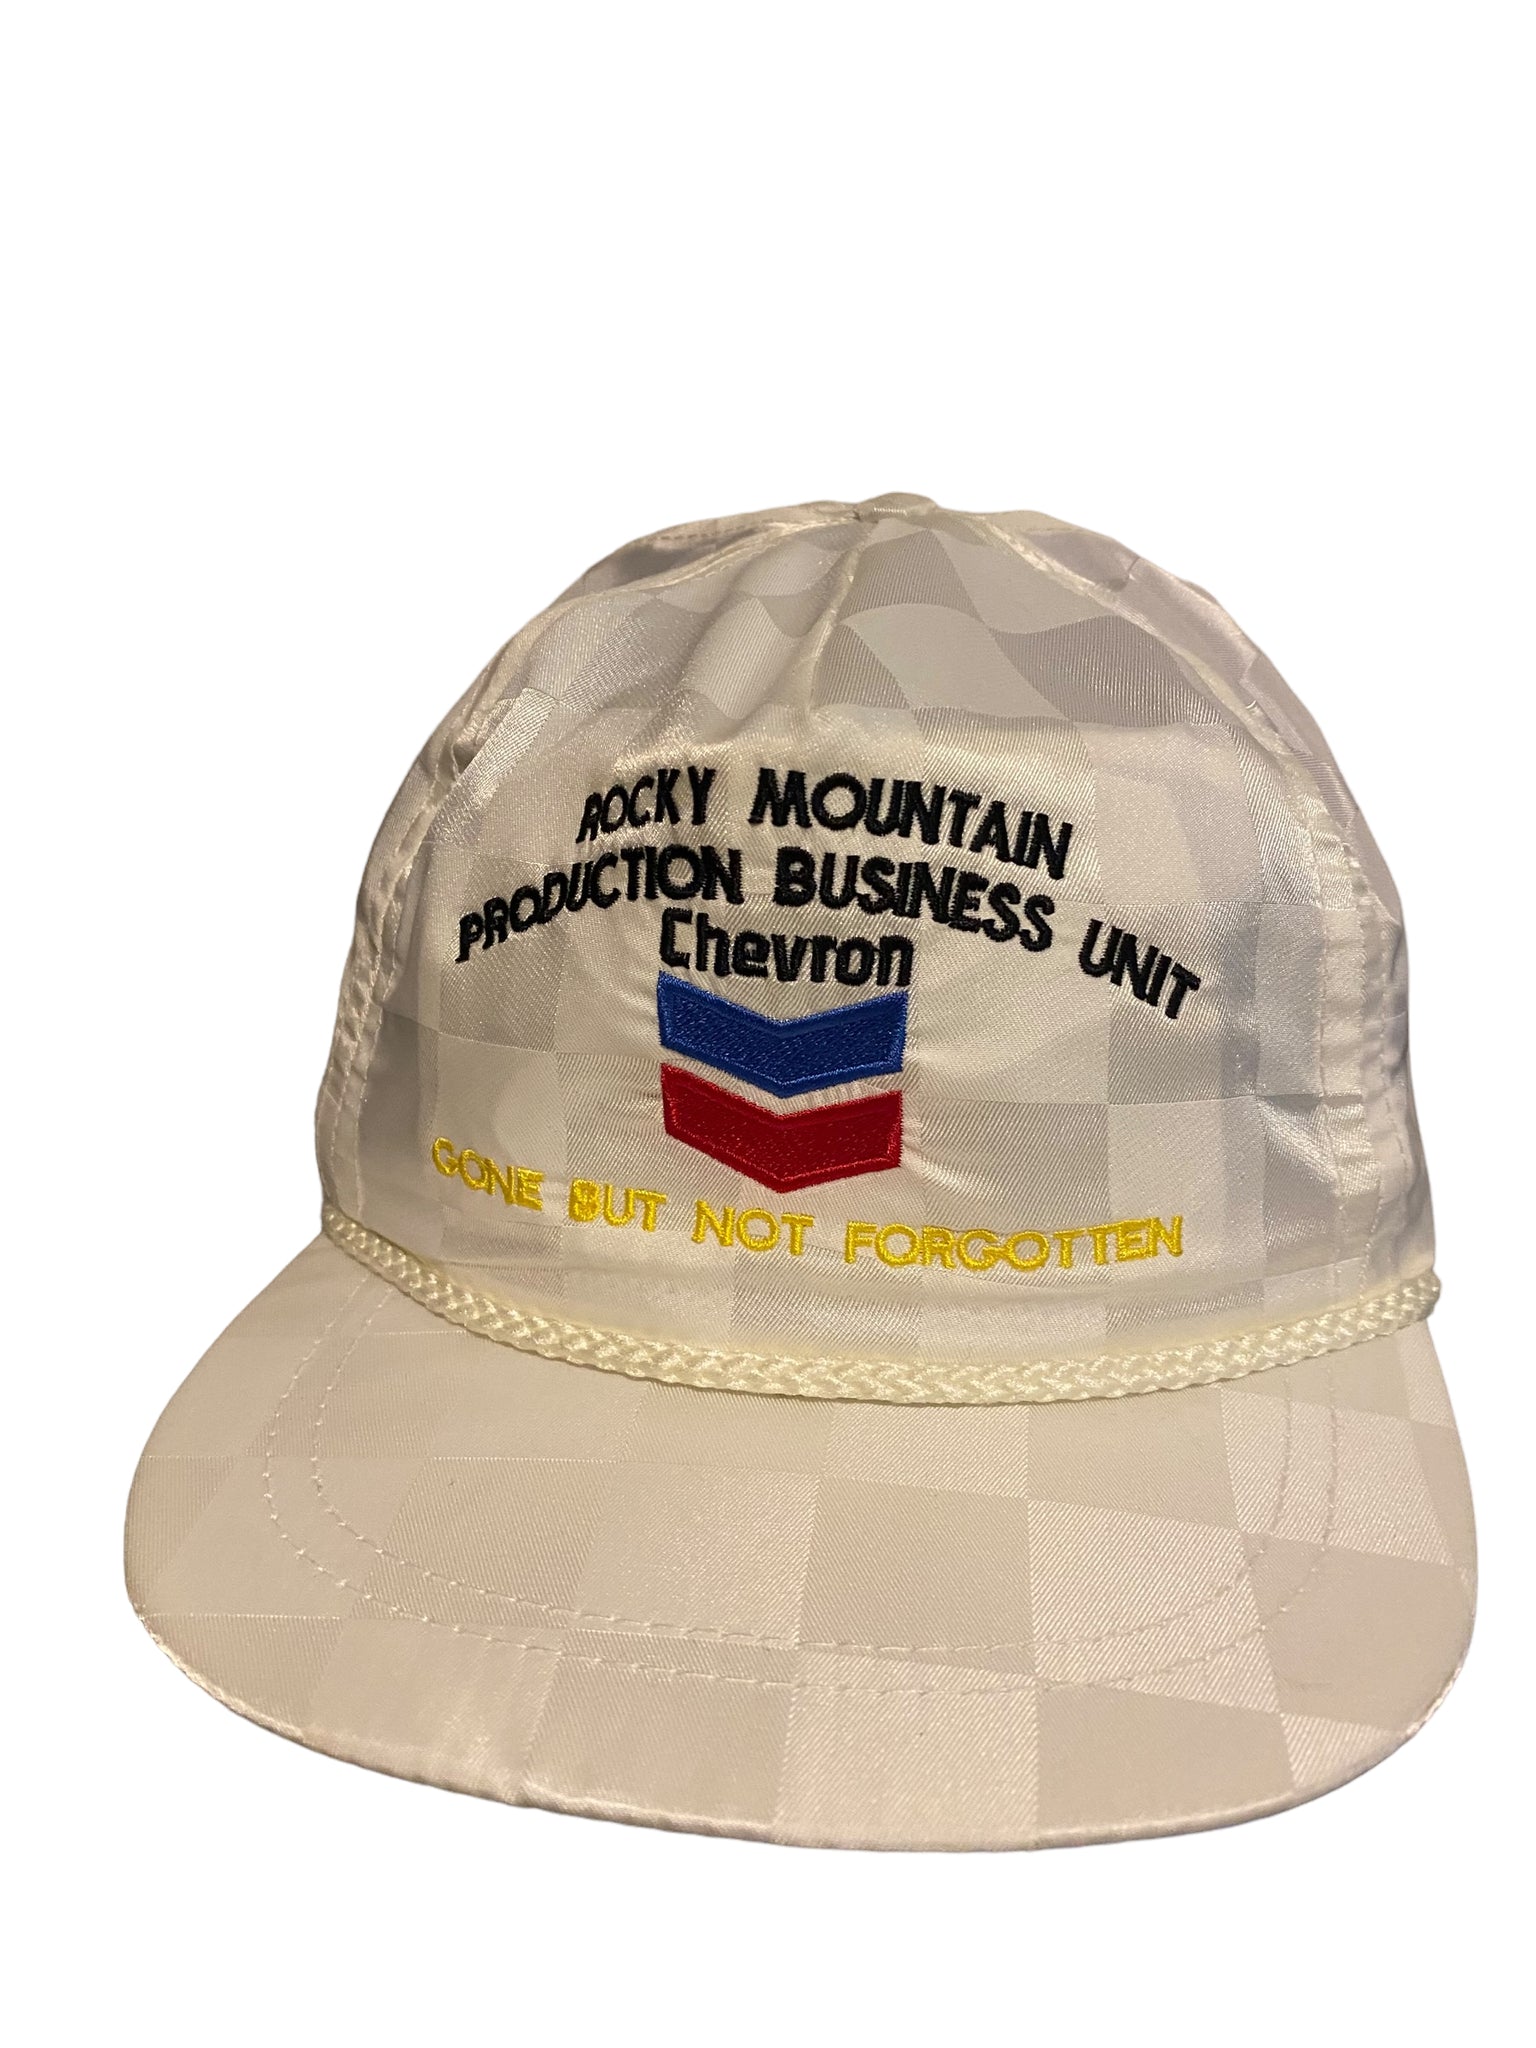 Vintage Rockey Mountain Production Business Unit Chevron Adjustable Strap Hat